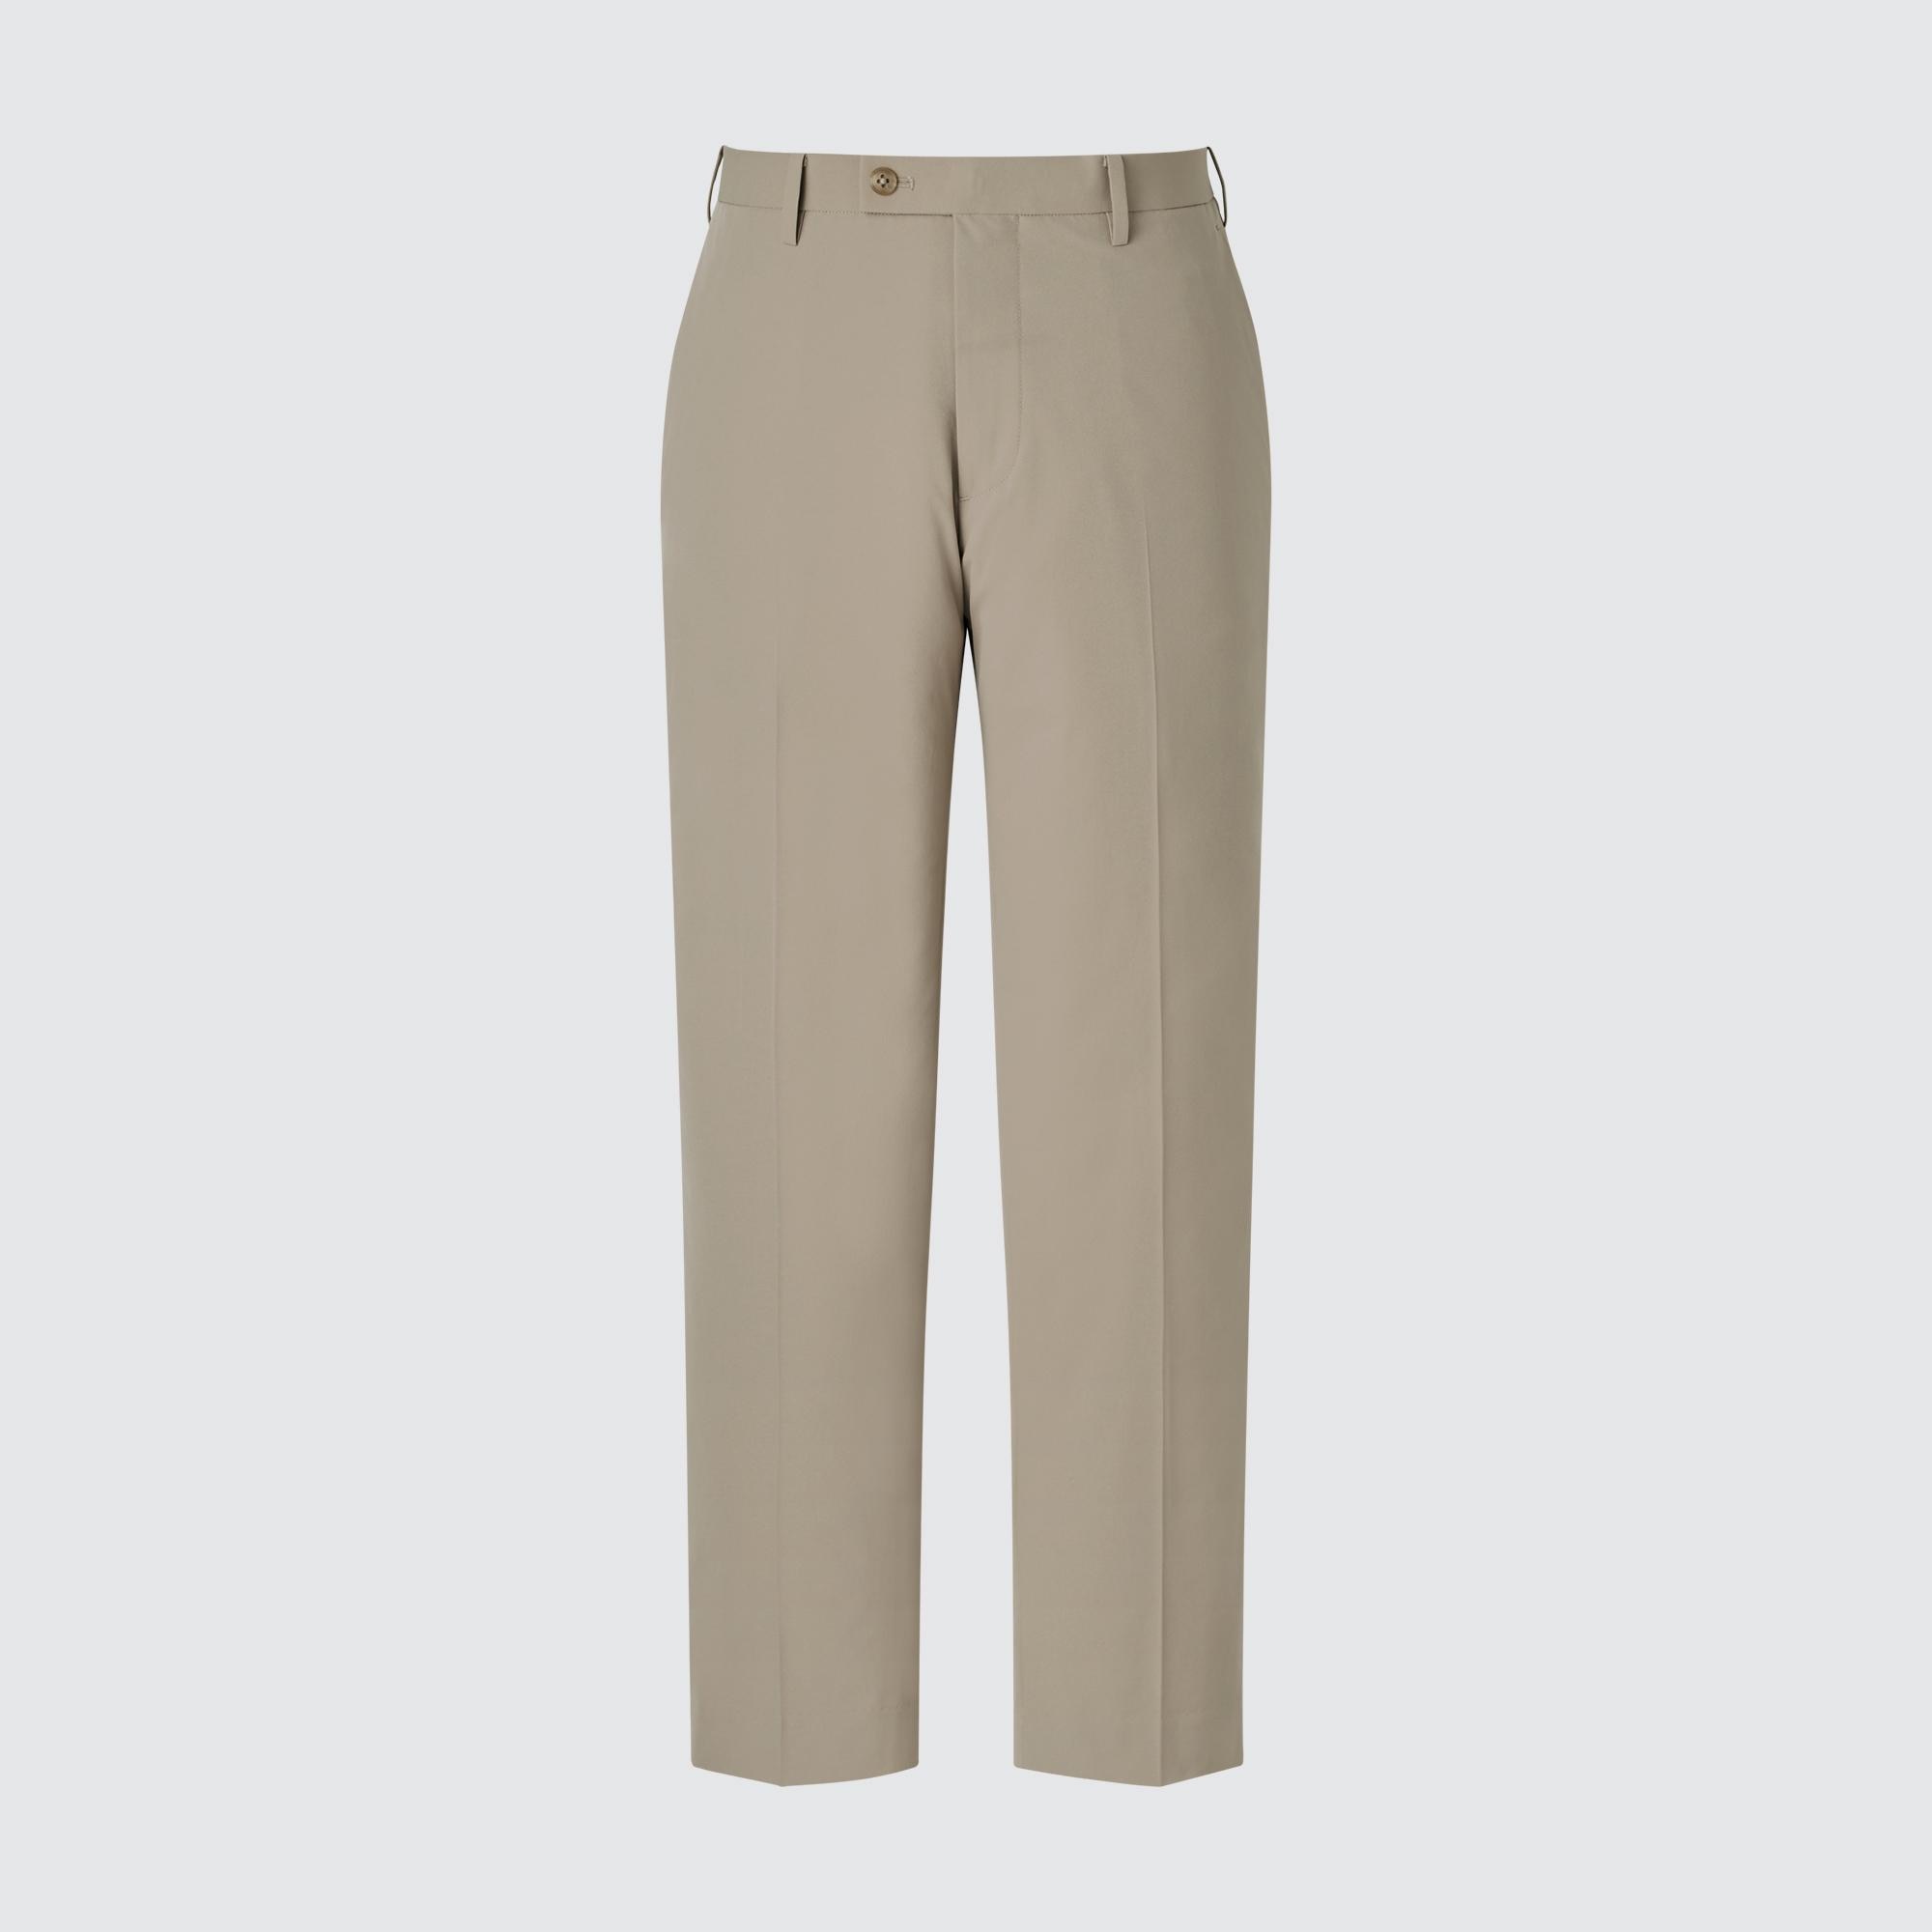 AirSense Pants (Cotton-Like)